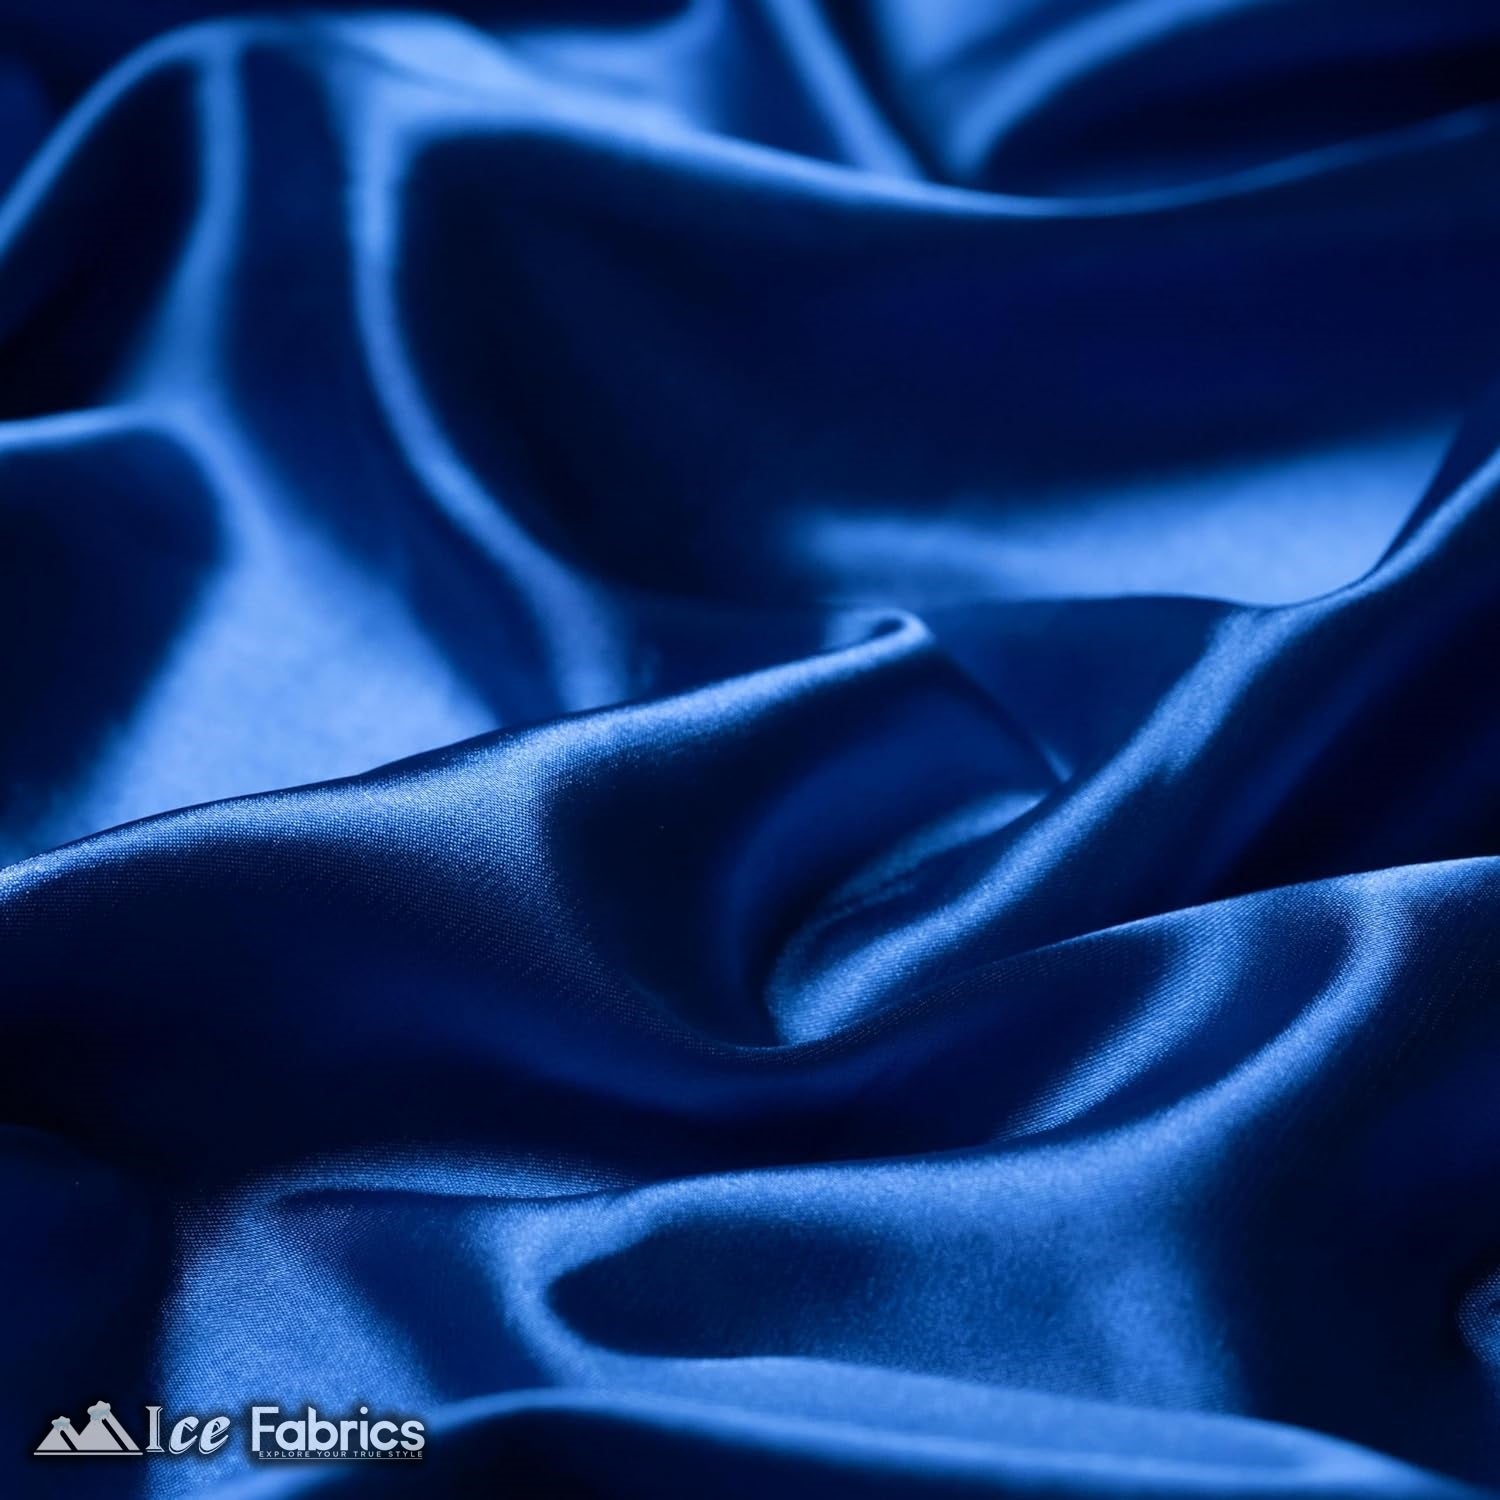 New Shiny Royal Blue Charmeuse Stretch Satin FabricICE FABRICSICE FABRICSBy The Yard (60" Wide)New Shiny Royal Blue Charmeuse Stretch Satin Fabric